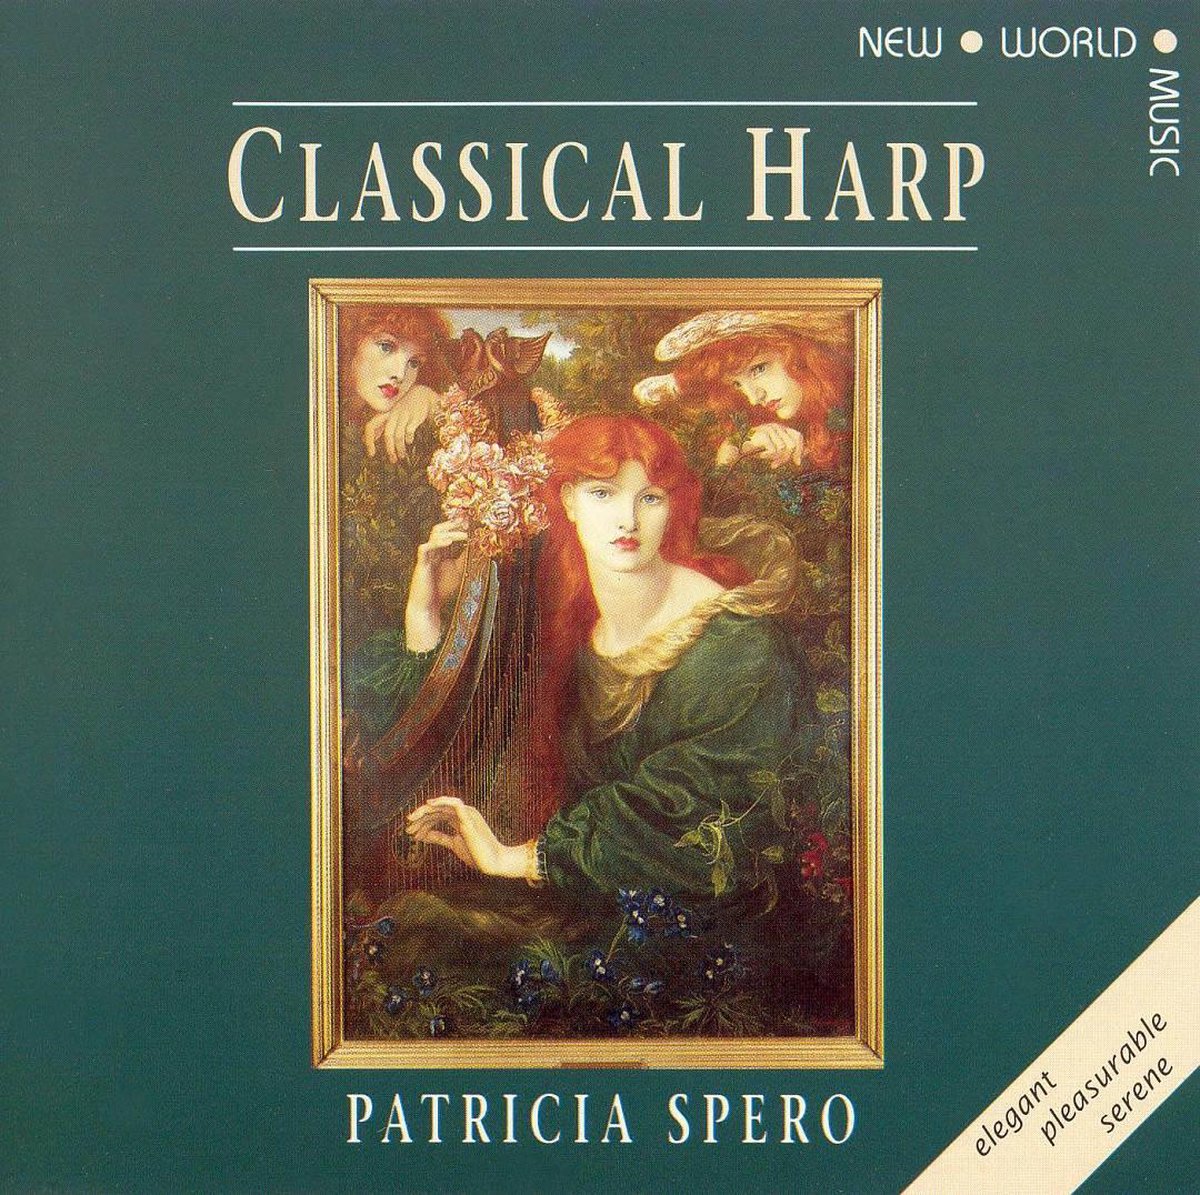 Afbeelding van product Classical Harp  - Patricia Spero